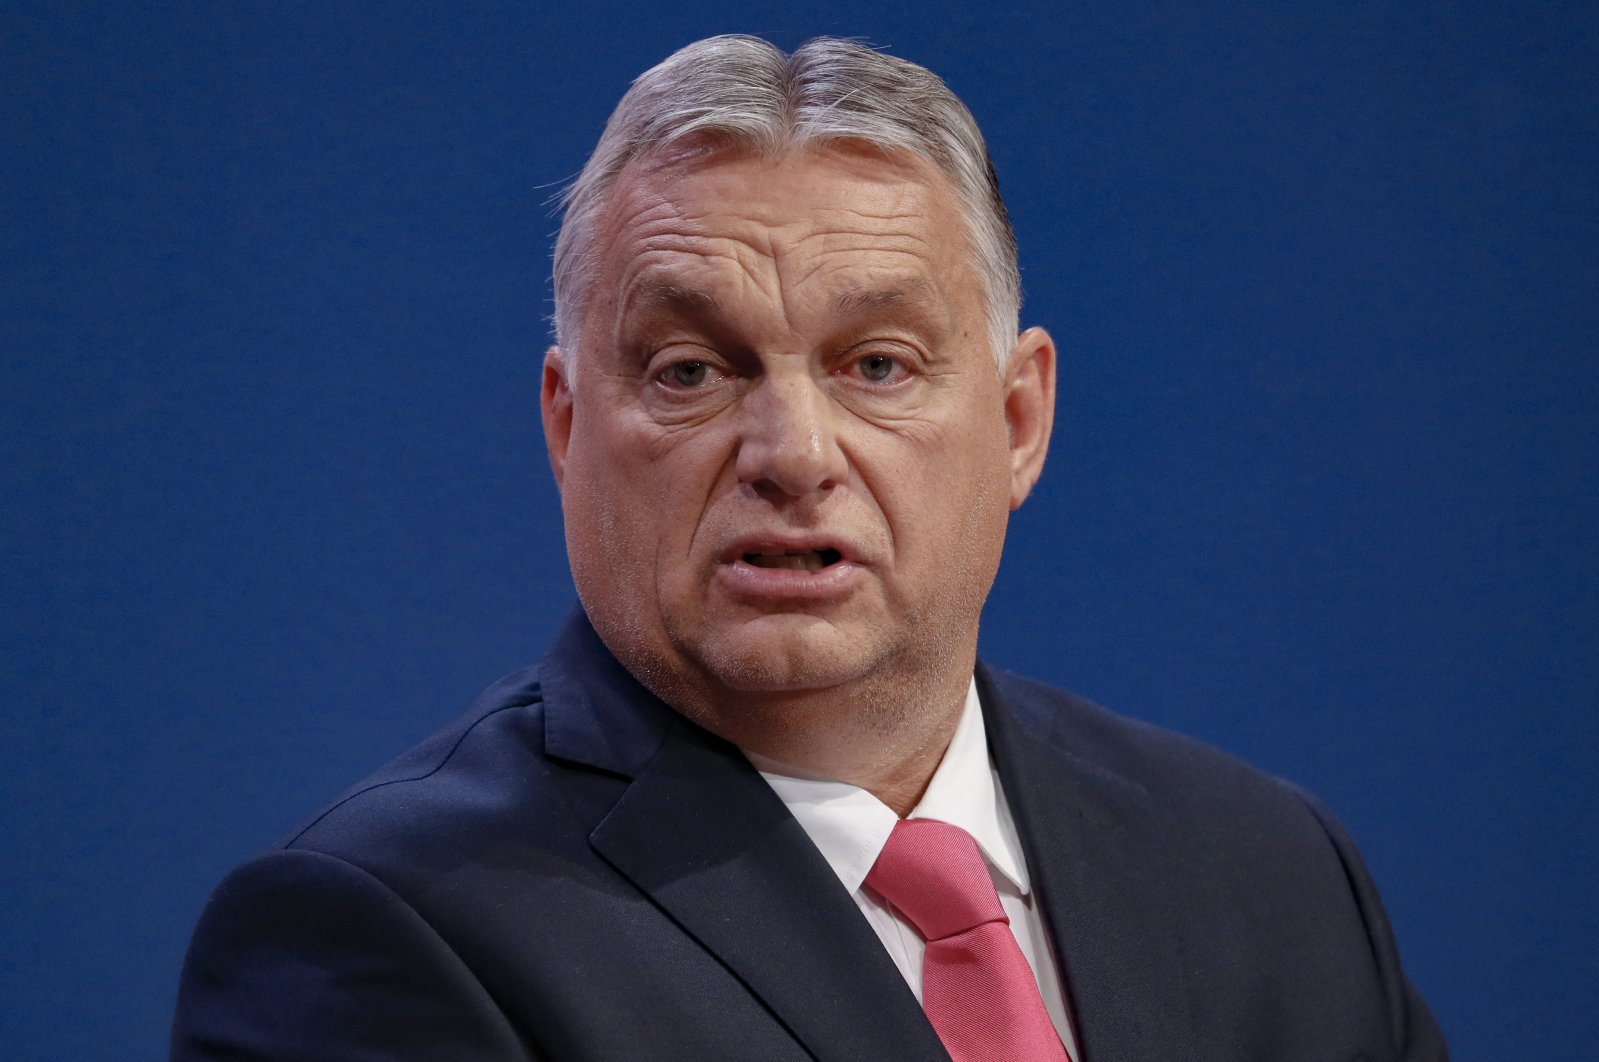 Hungaria akan mengadakan pemilihan 3 April saat Orban menghadapi koalisi bersatu